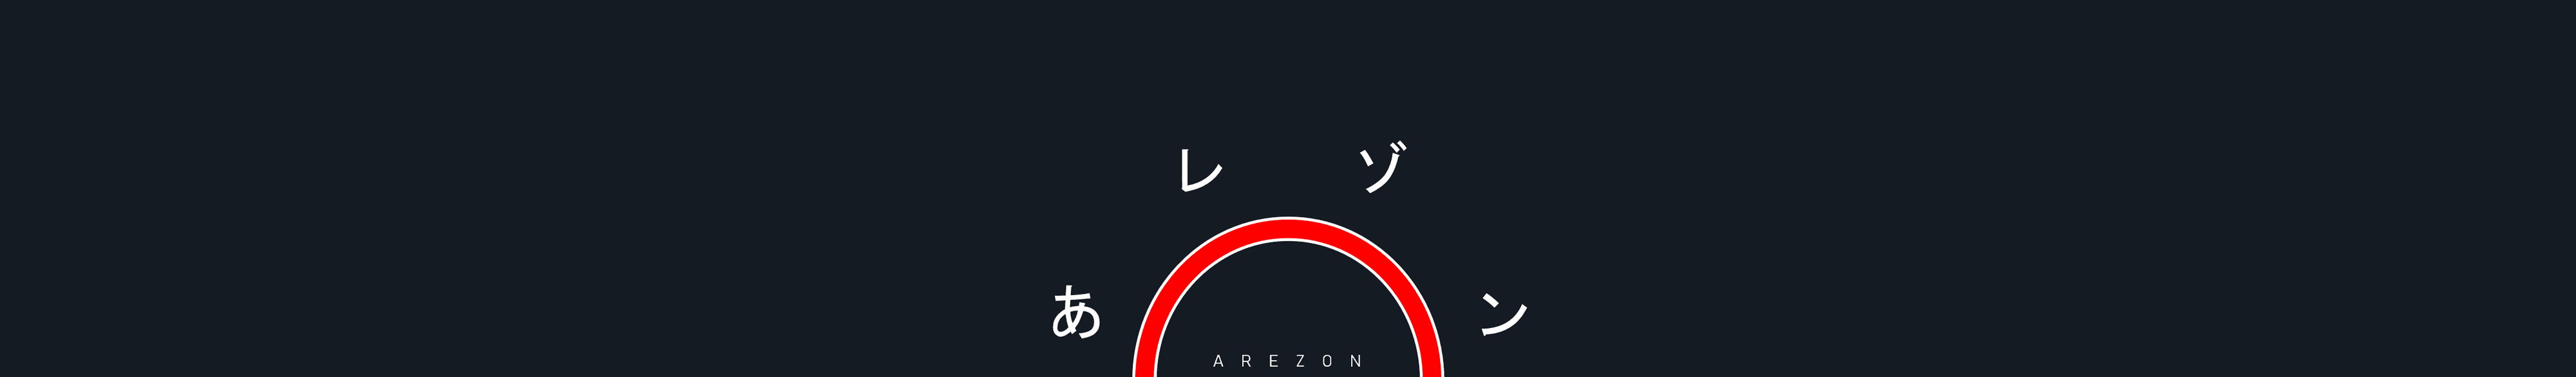 AREZON banner